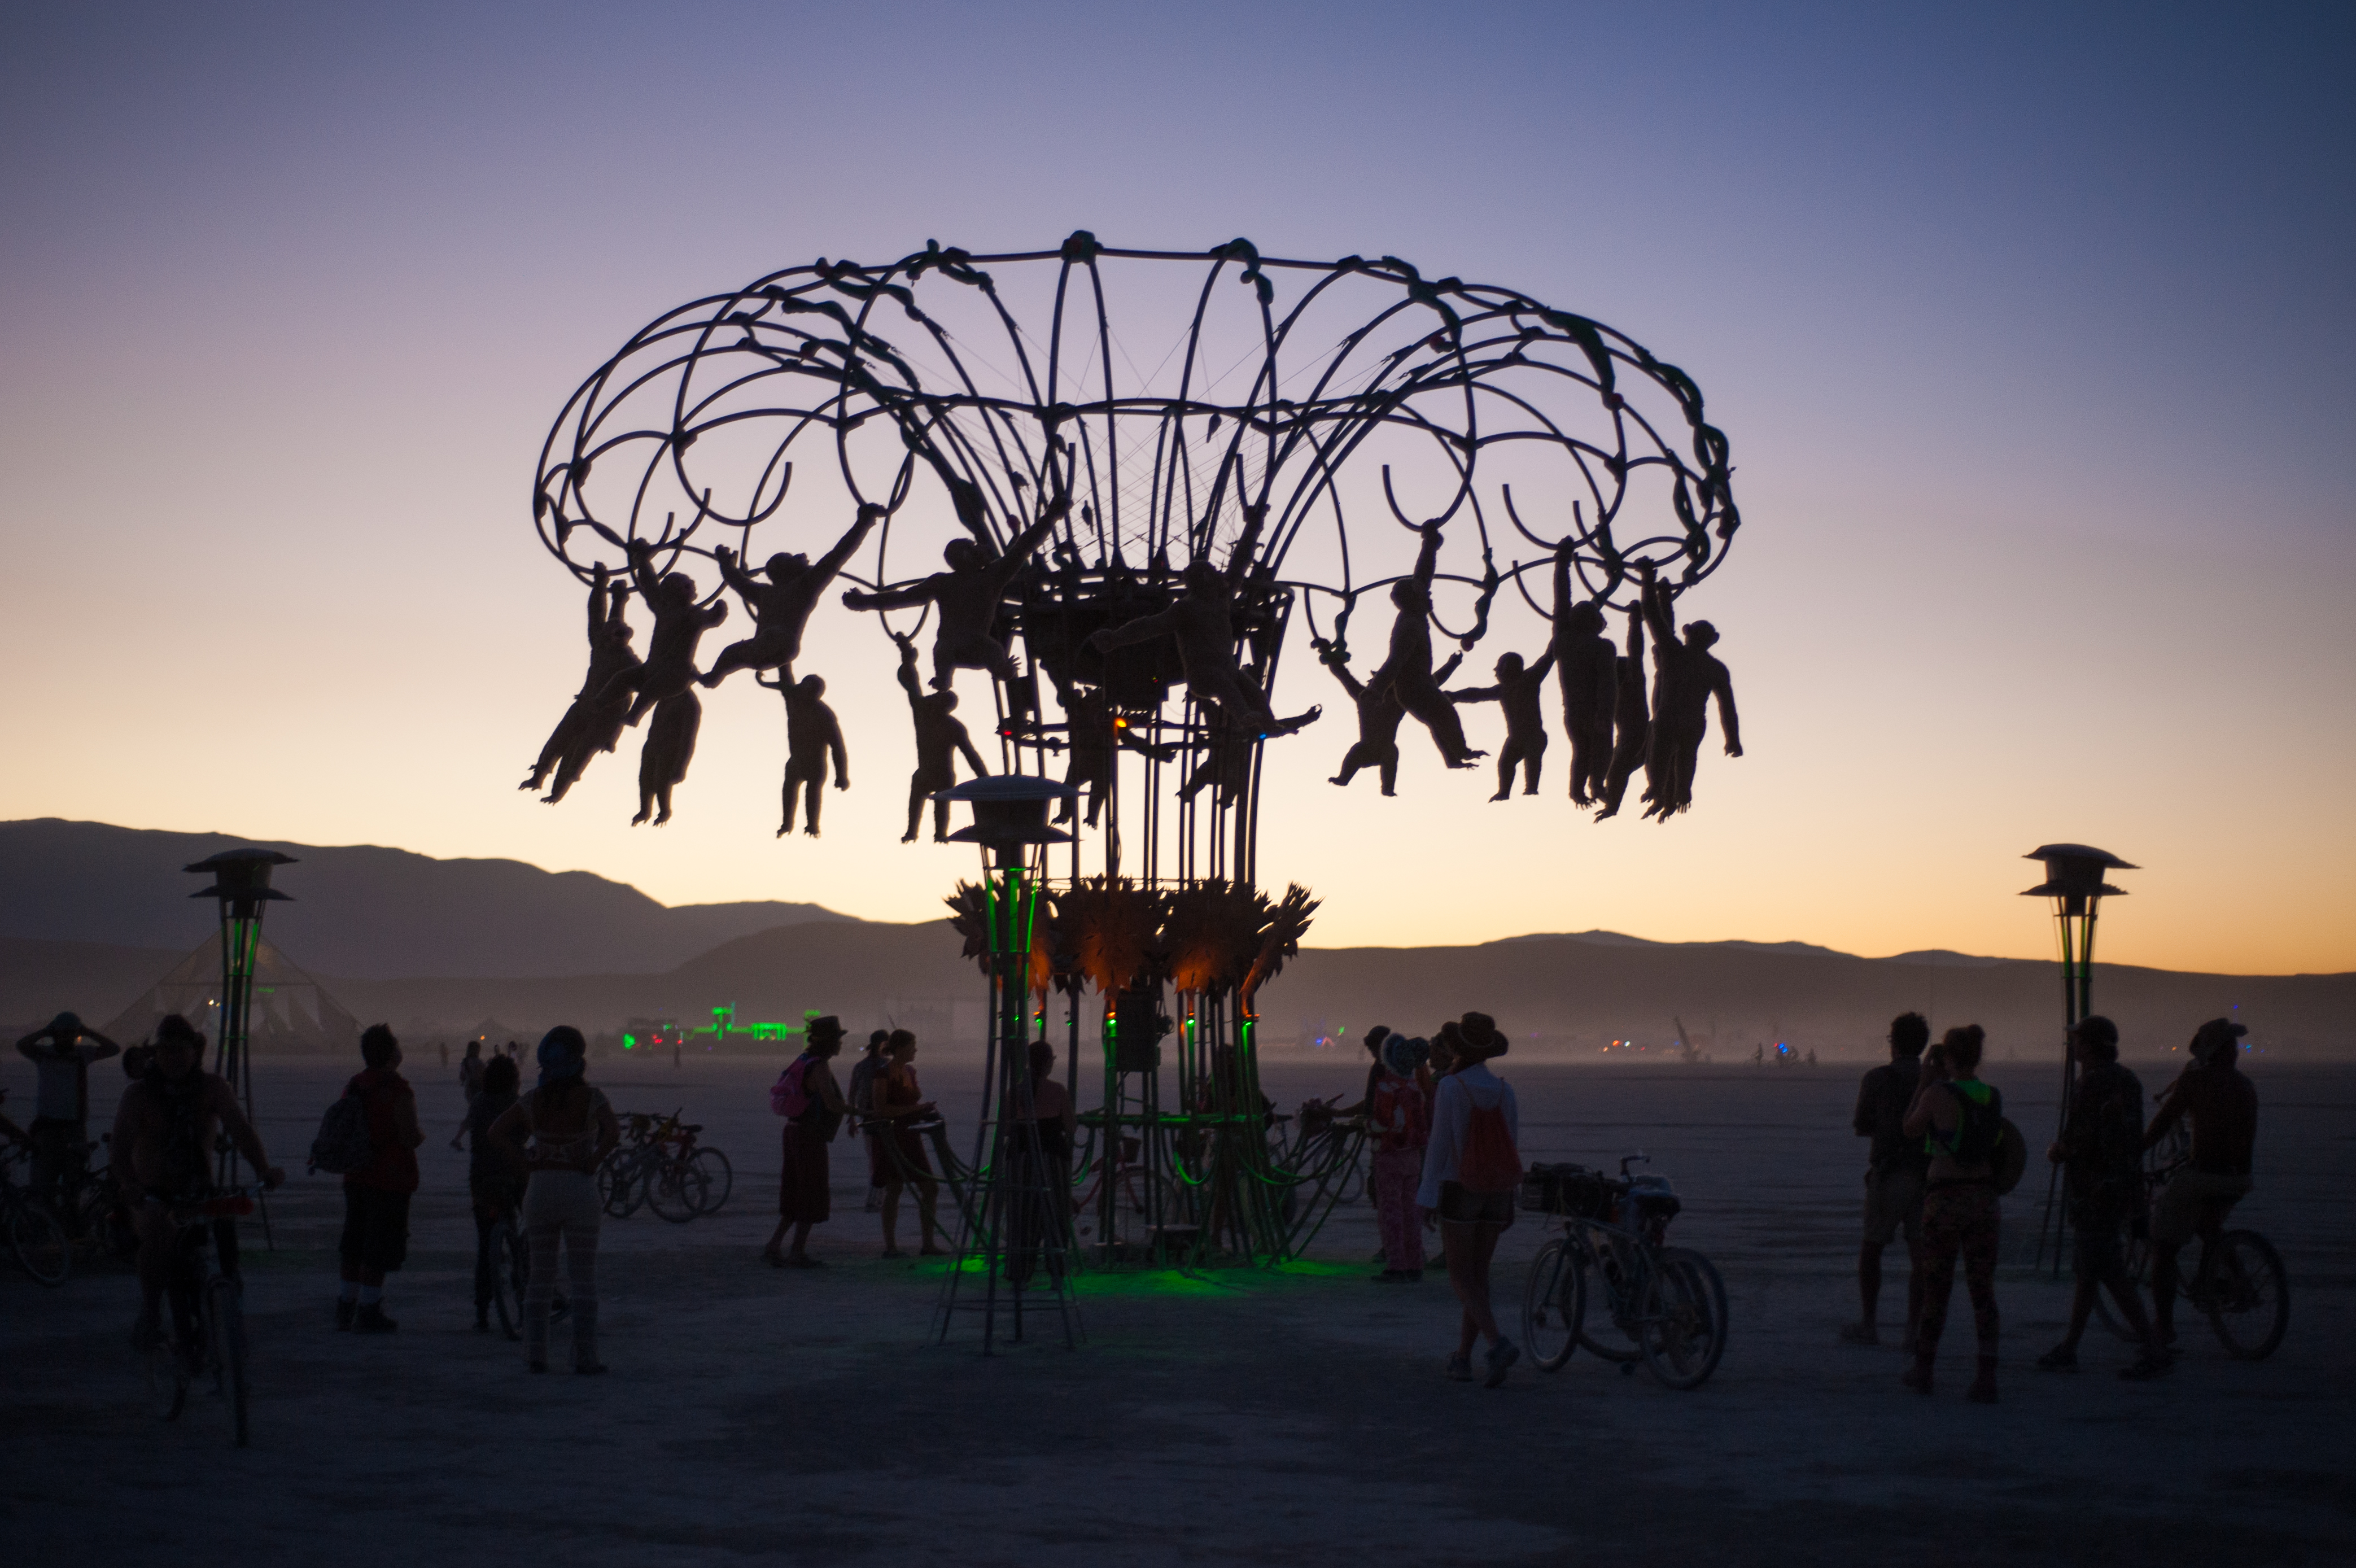 An art installation on the playa featuring spinning monkeys